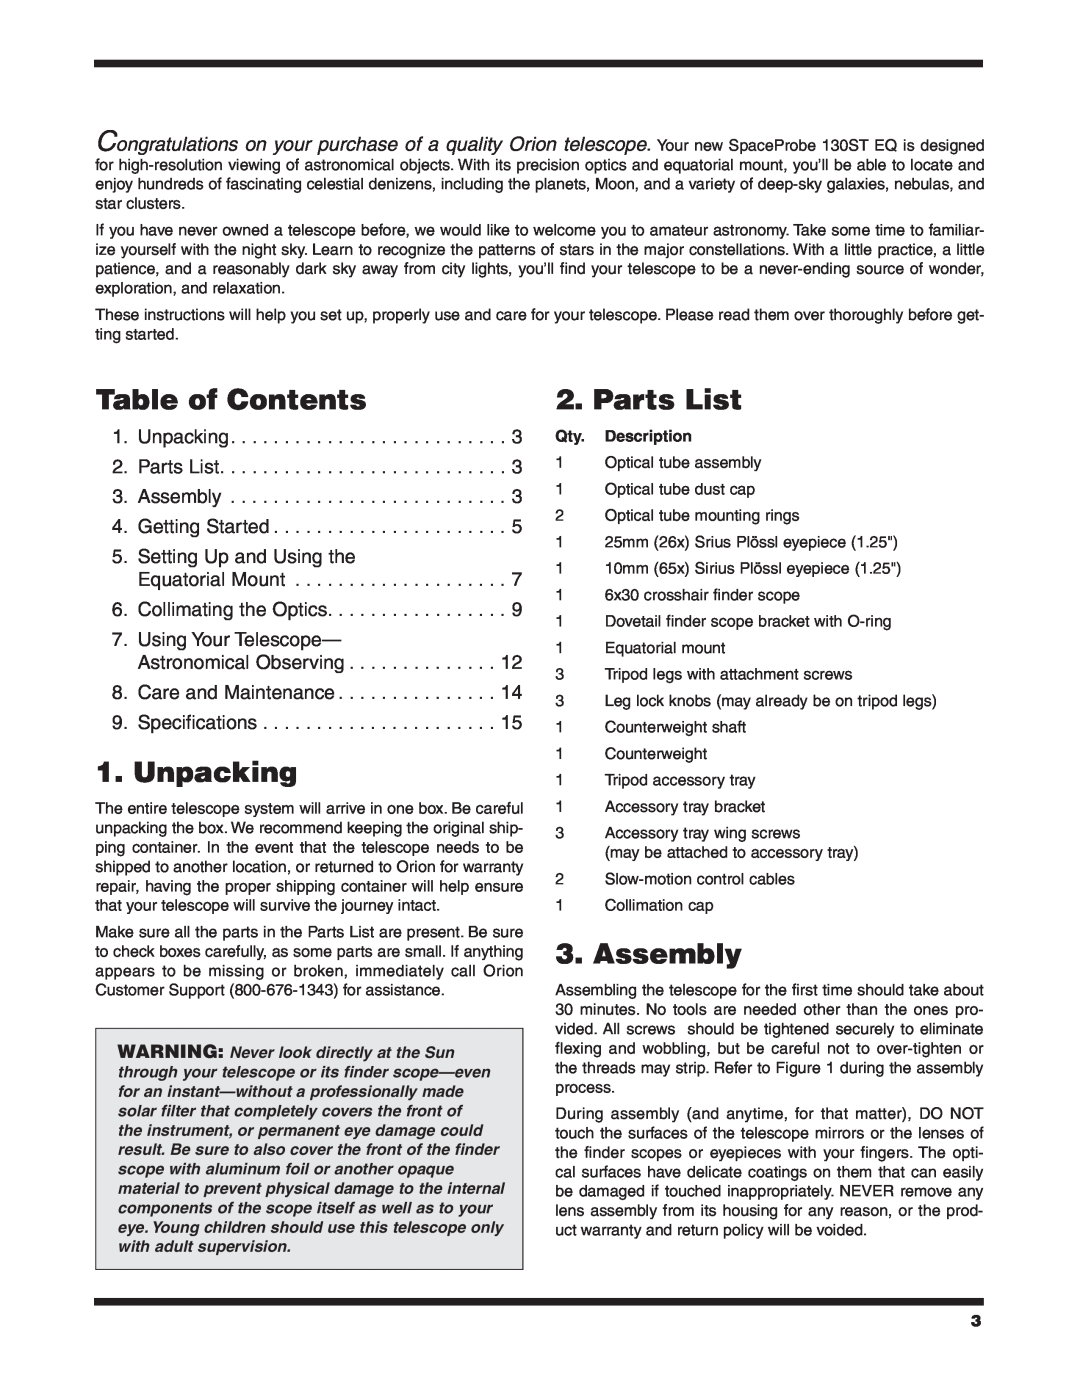 Orion 130ST EQ instruction manual Table of Contents, Unpacking, Parts List, Assembly, Qty. Description 